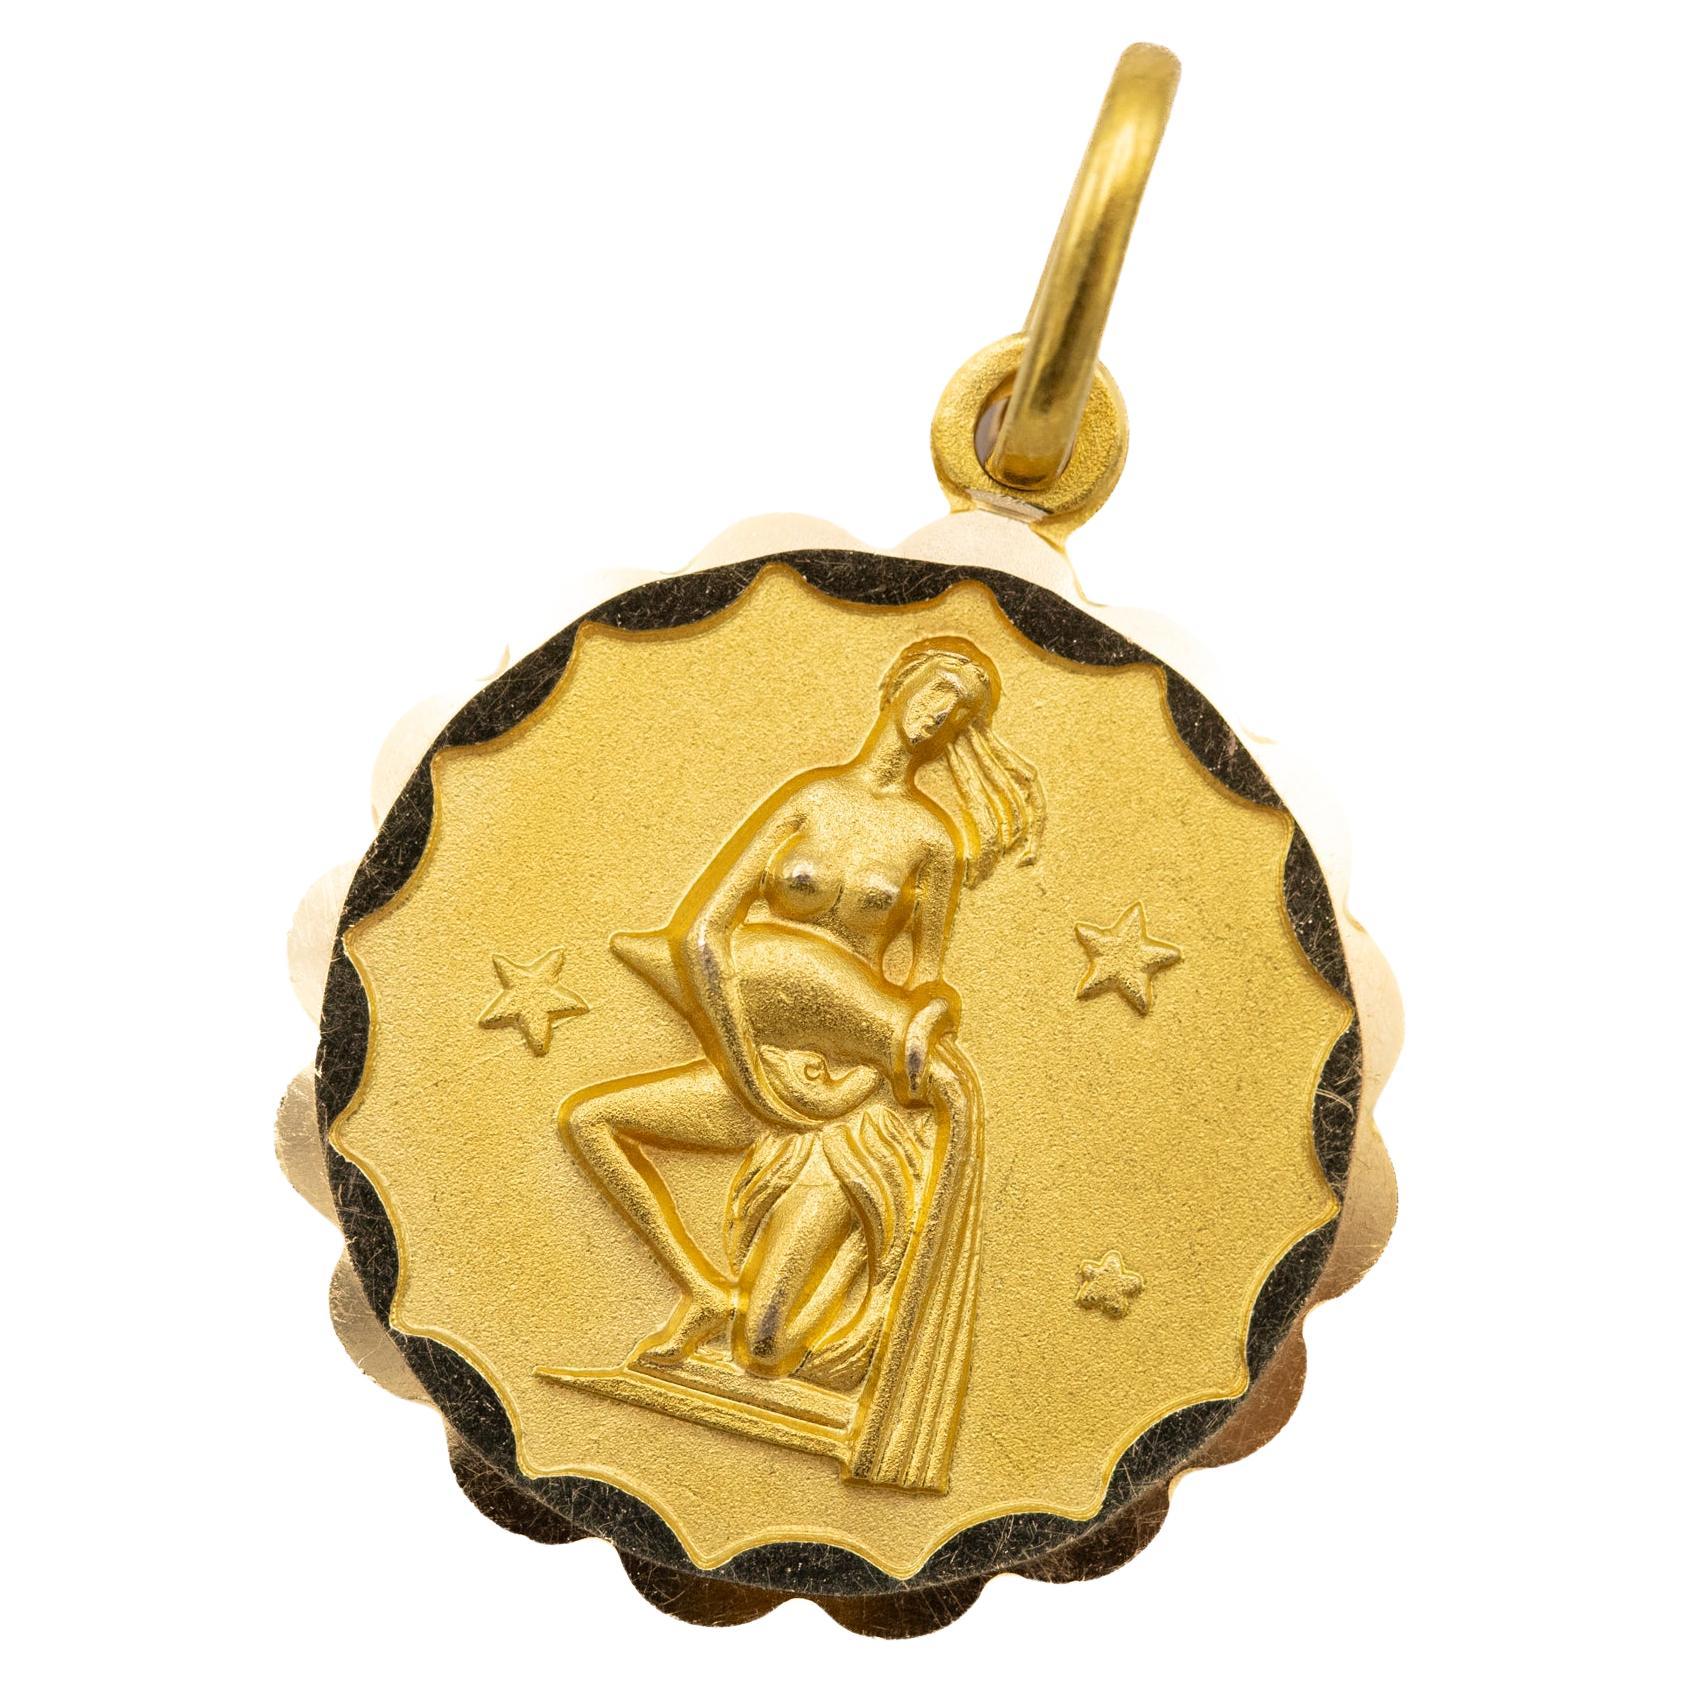 Vintage 18 k Italian zodiac charm pendant - Aquarius charm - solid yellow gold